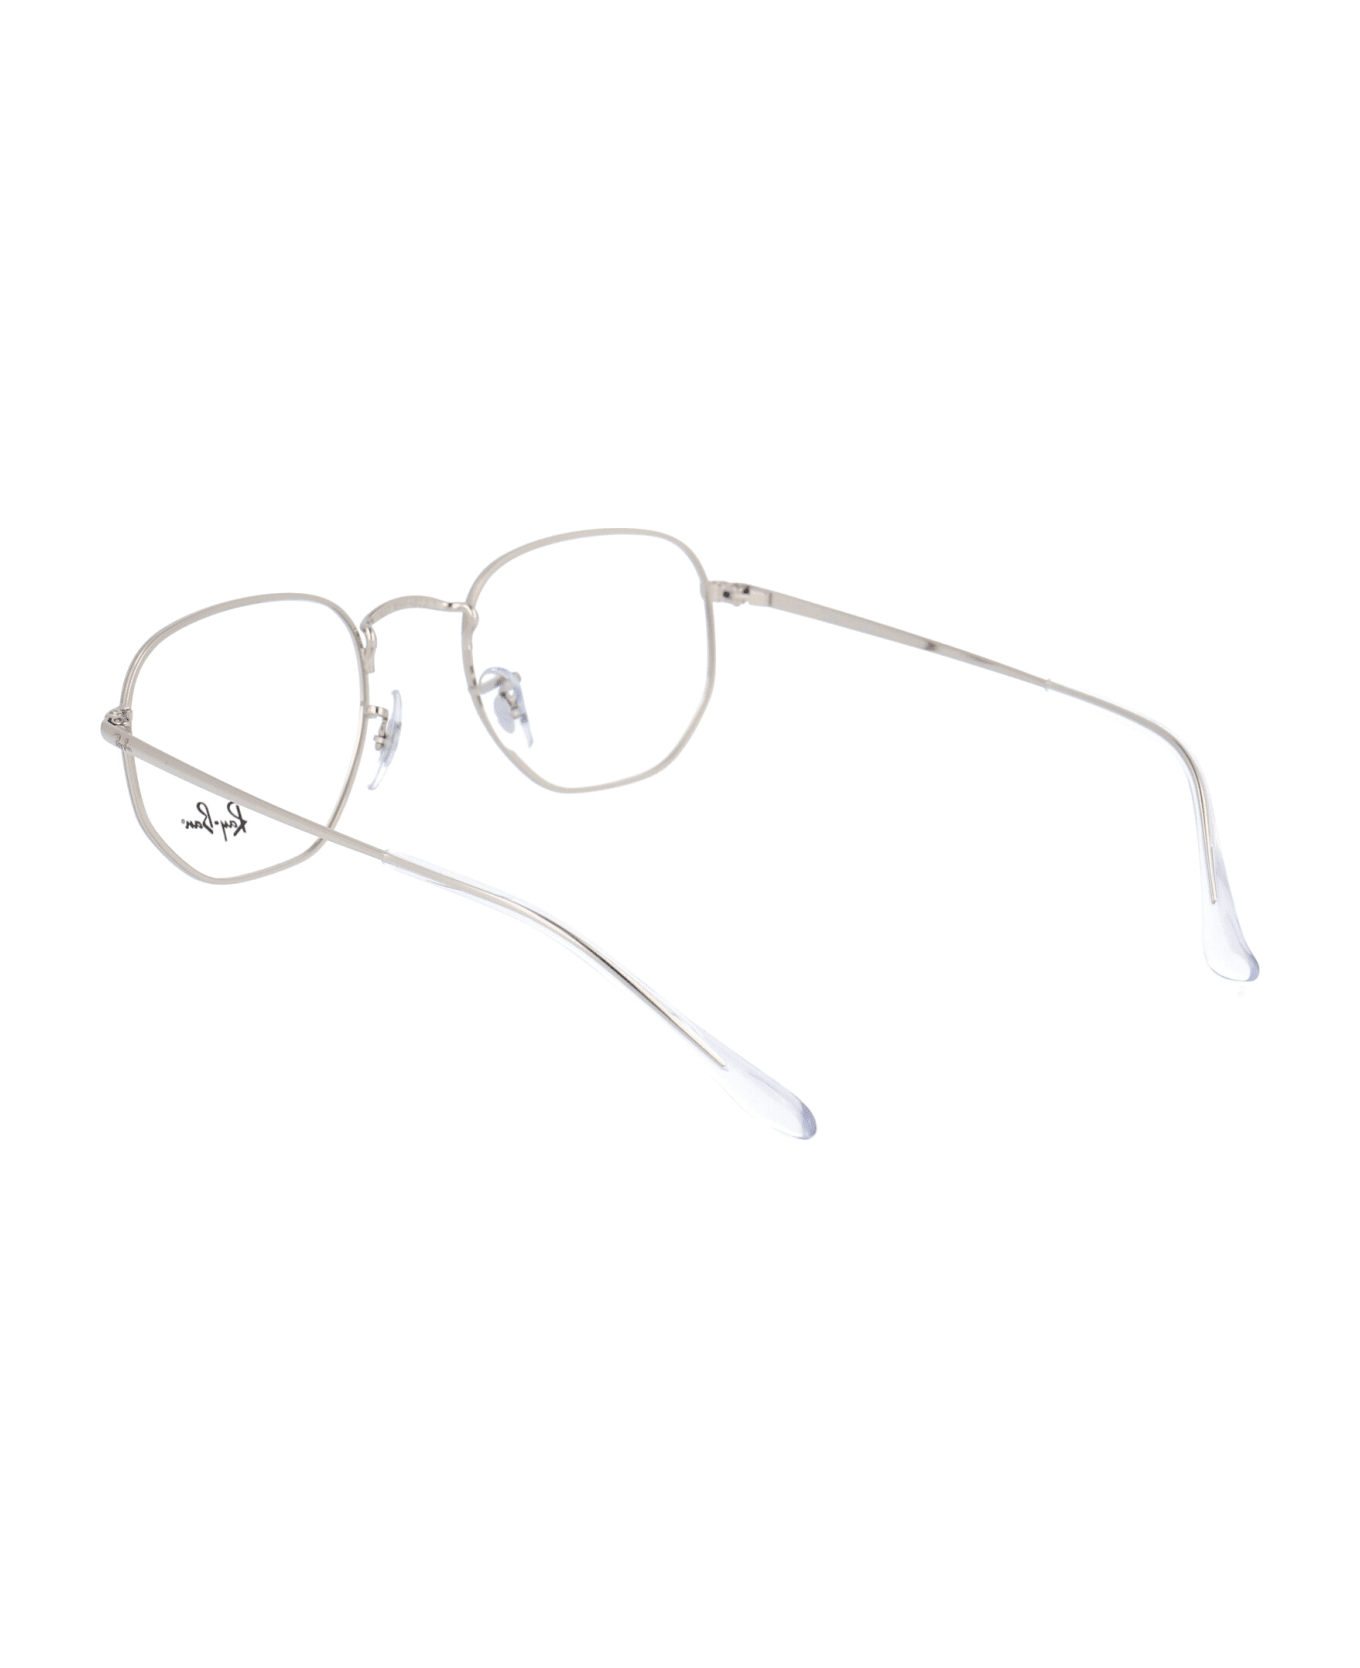 Ray-Ban Hexagonal Glasses - 2501 SILVER